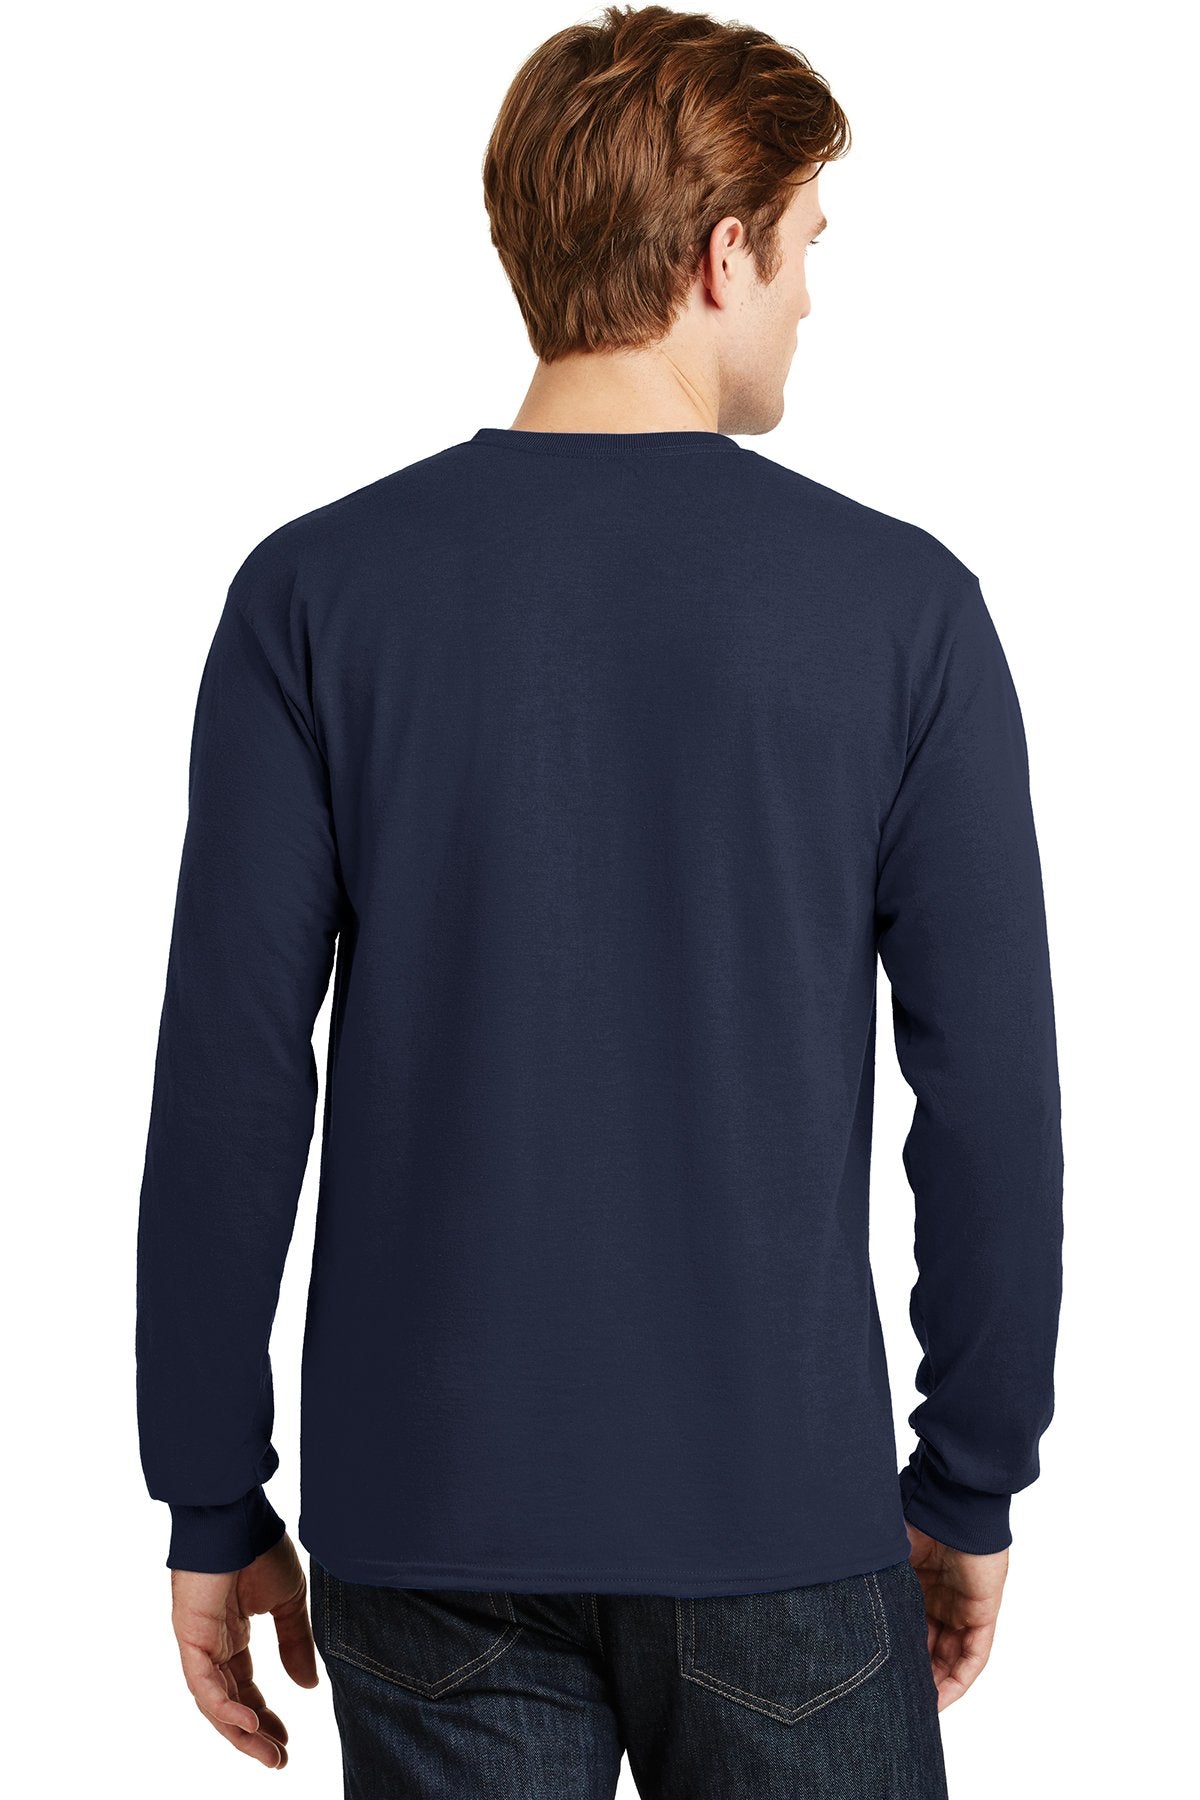 gildan dryblend cotton poly long sleeve t shirt 8400 navy